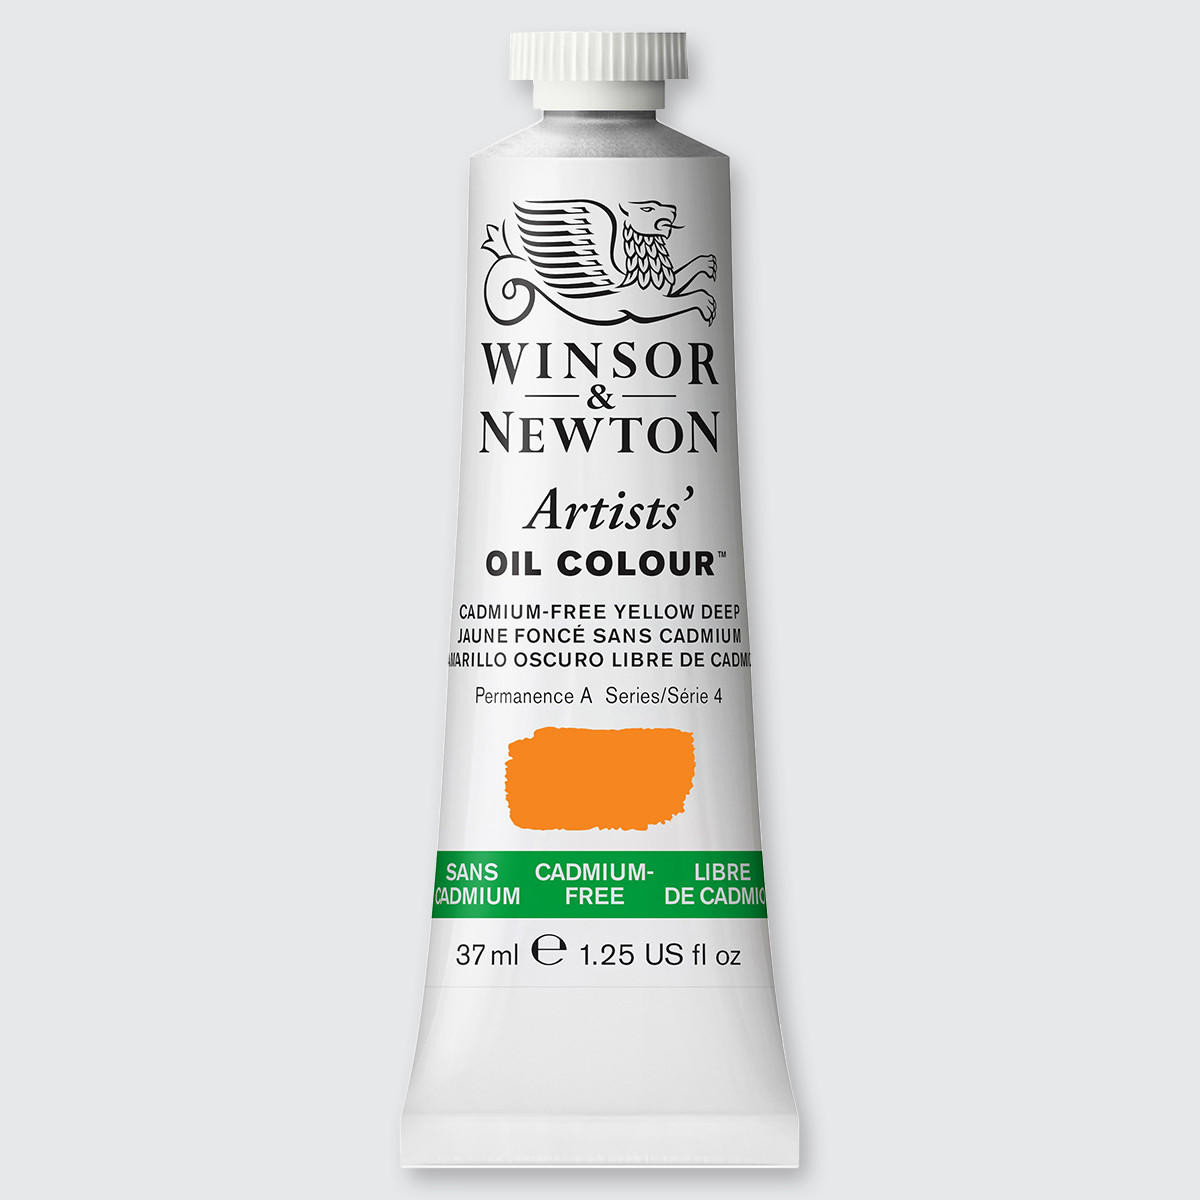 Winsor & Newton Artists’ Oil Colour 37ml Cadmium Free Yellow Deep